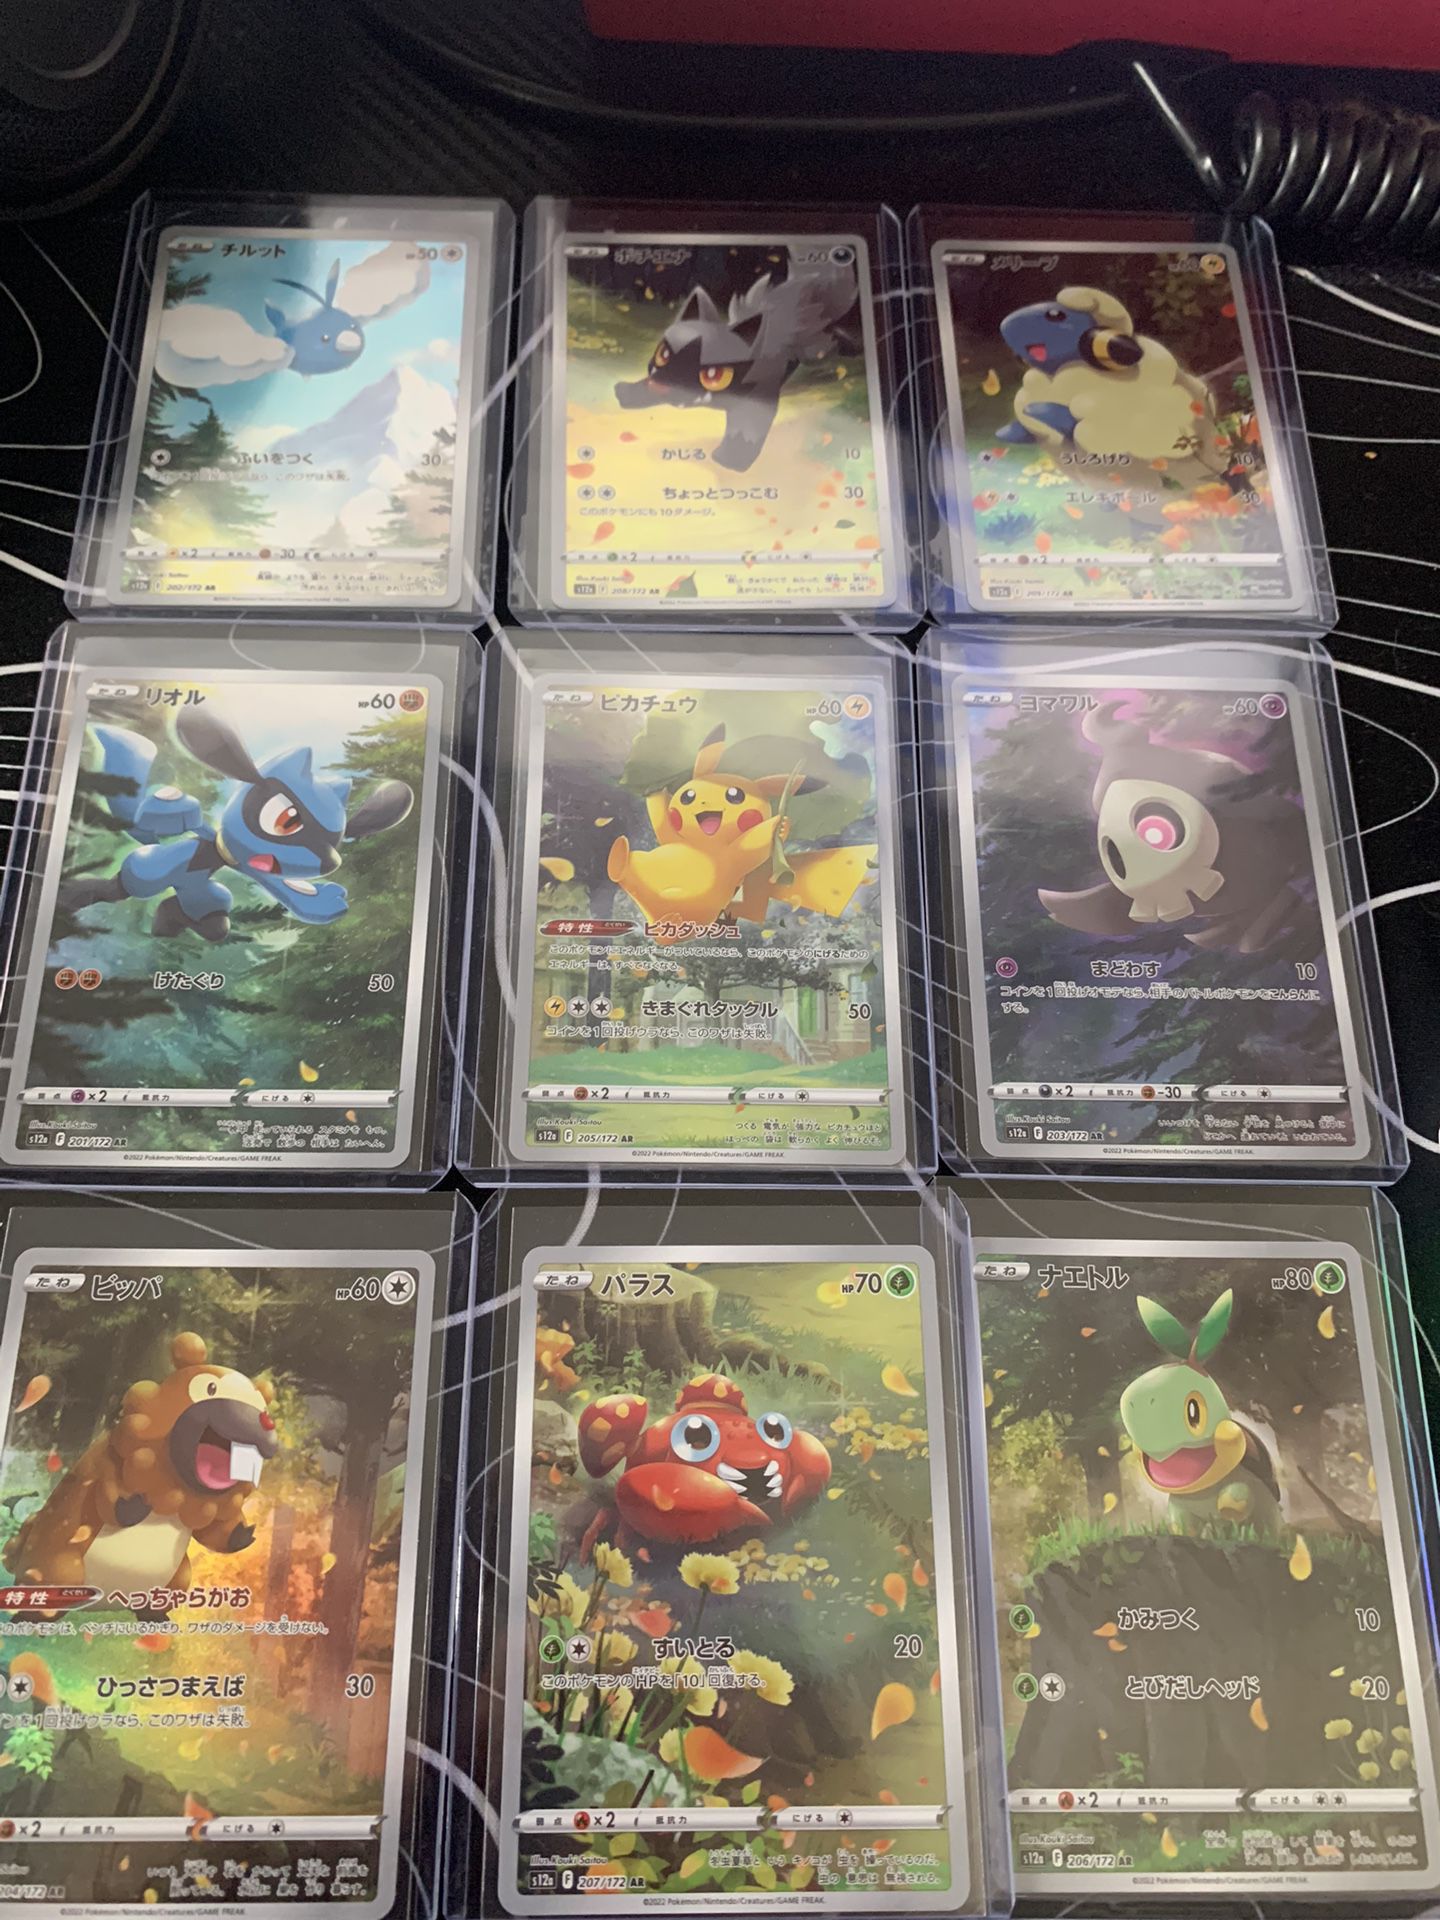 God Pack  Pikachu All 9 Cards